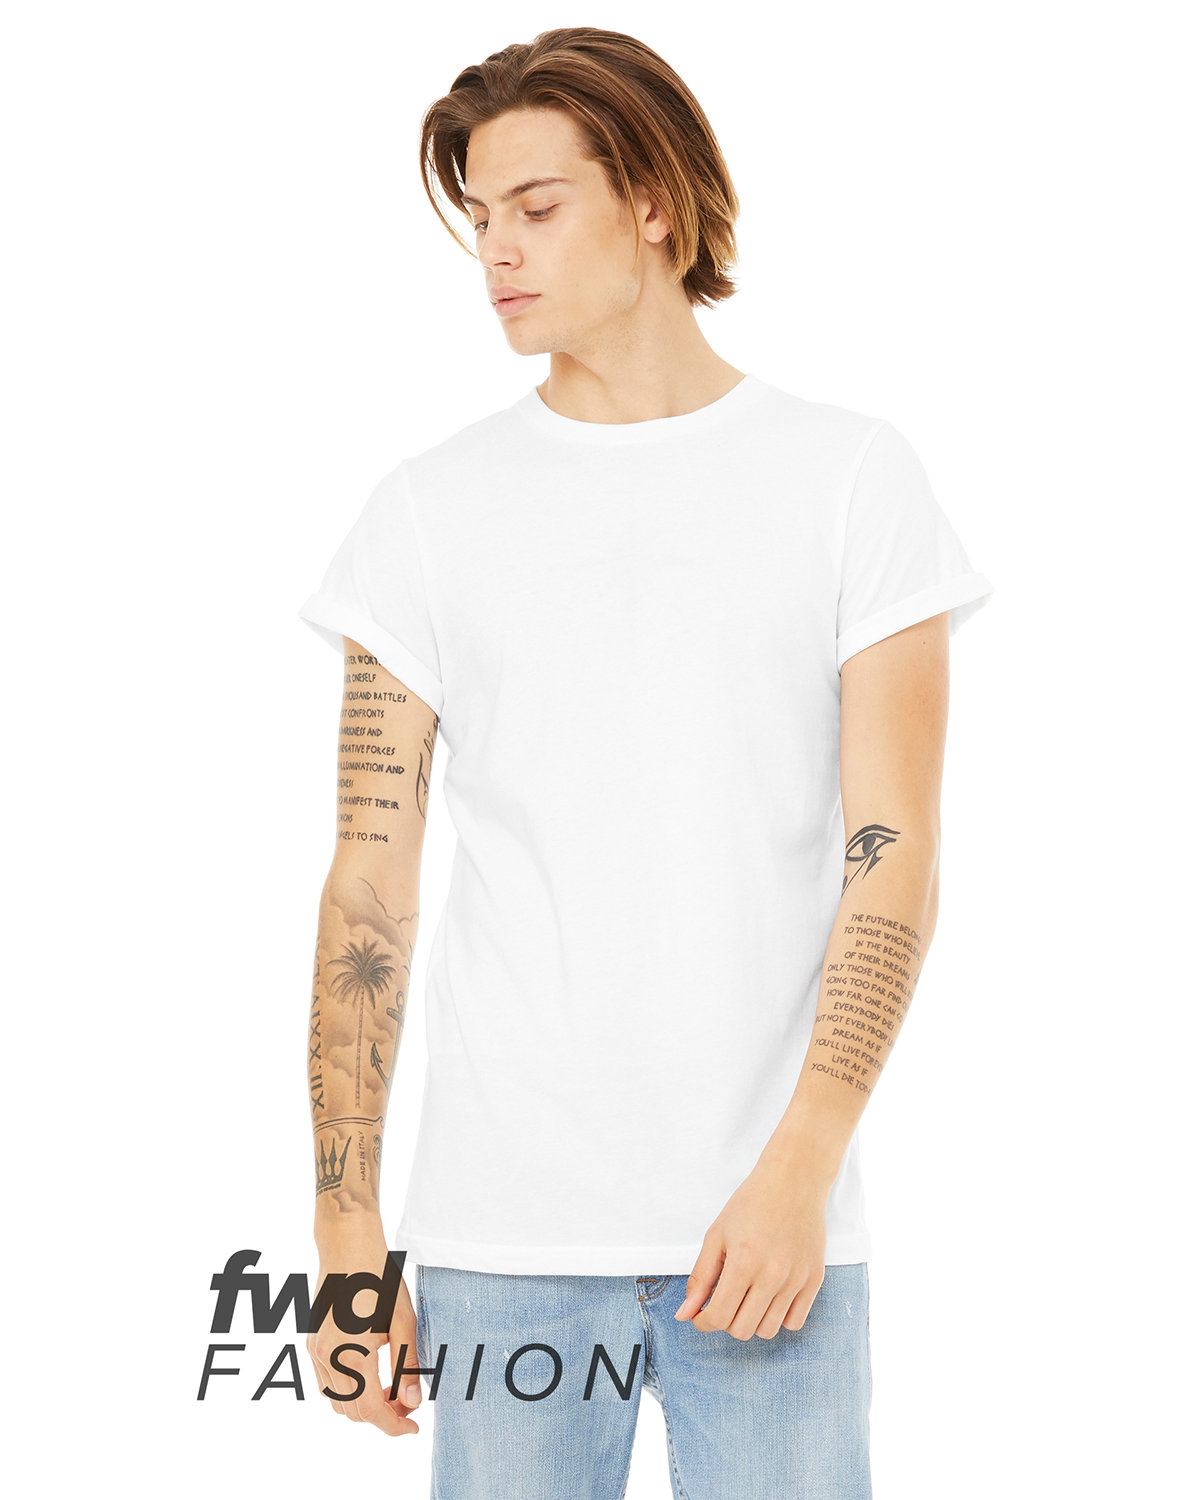 Bella + Canvas FWD Fashion Unisex Jersey Rolled Cuff T-Shirt WHITE 